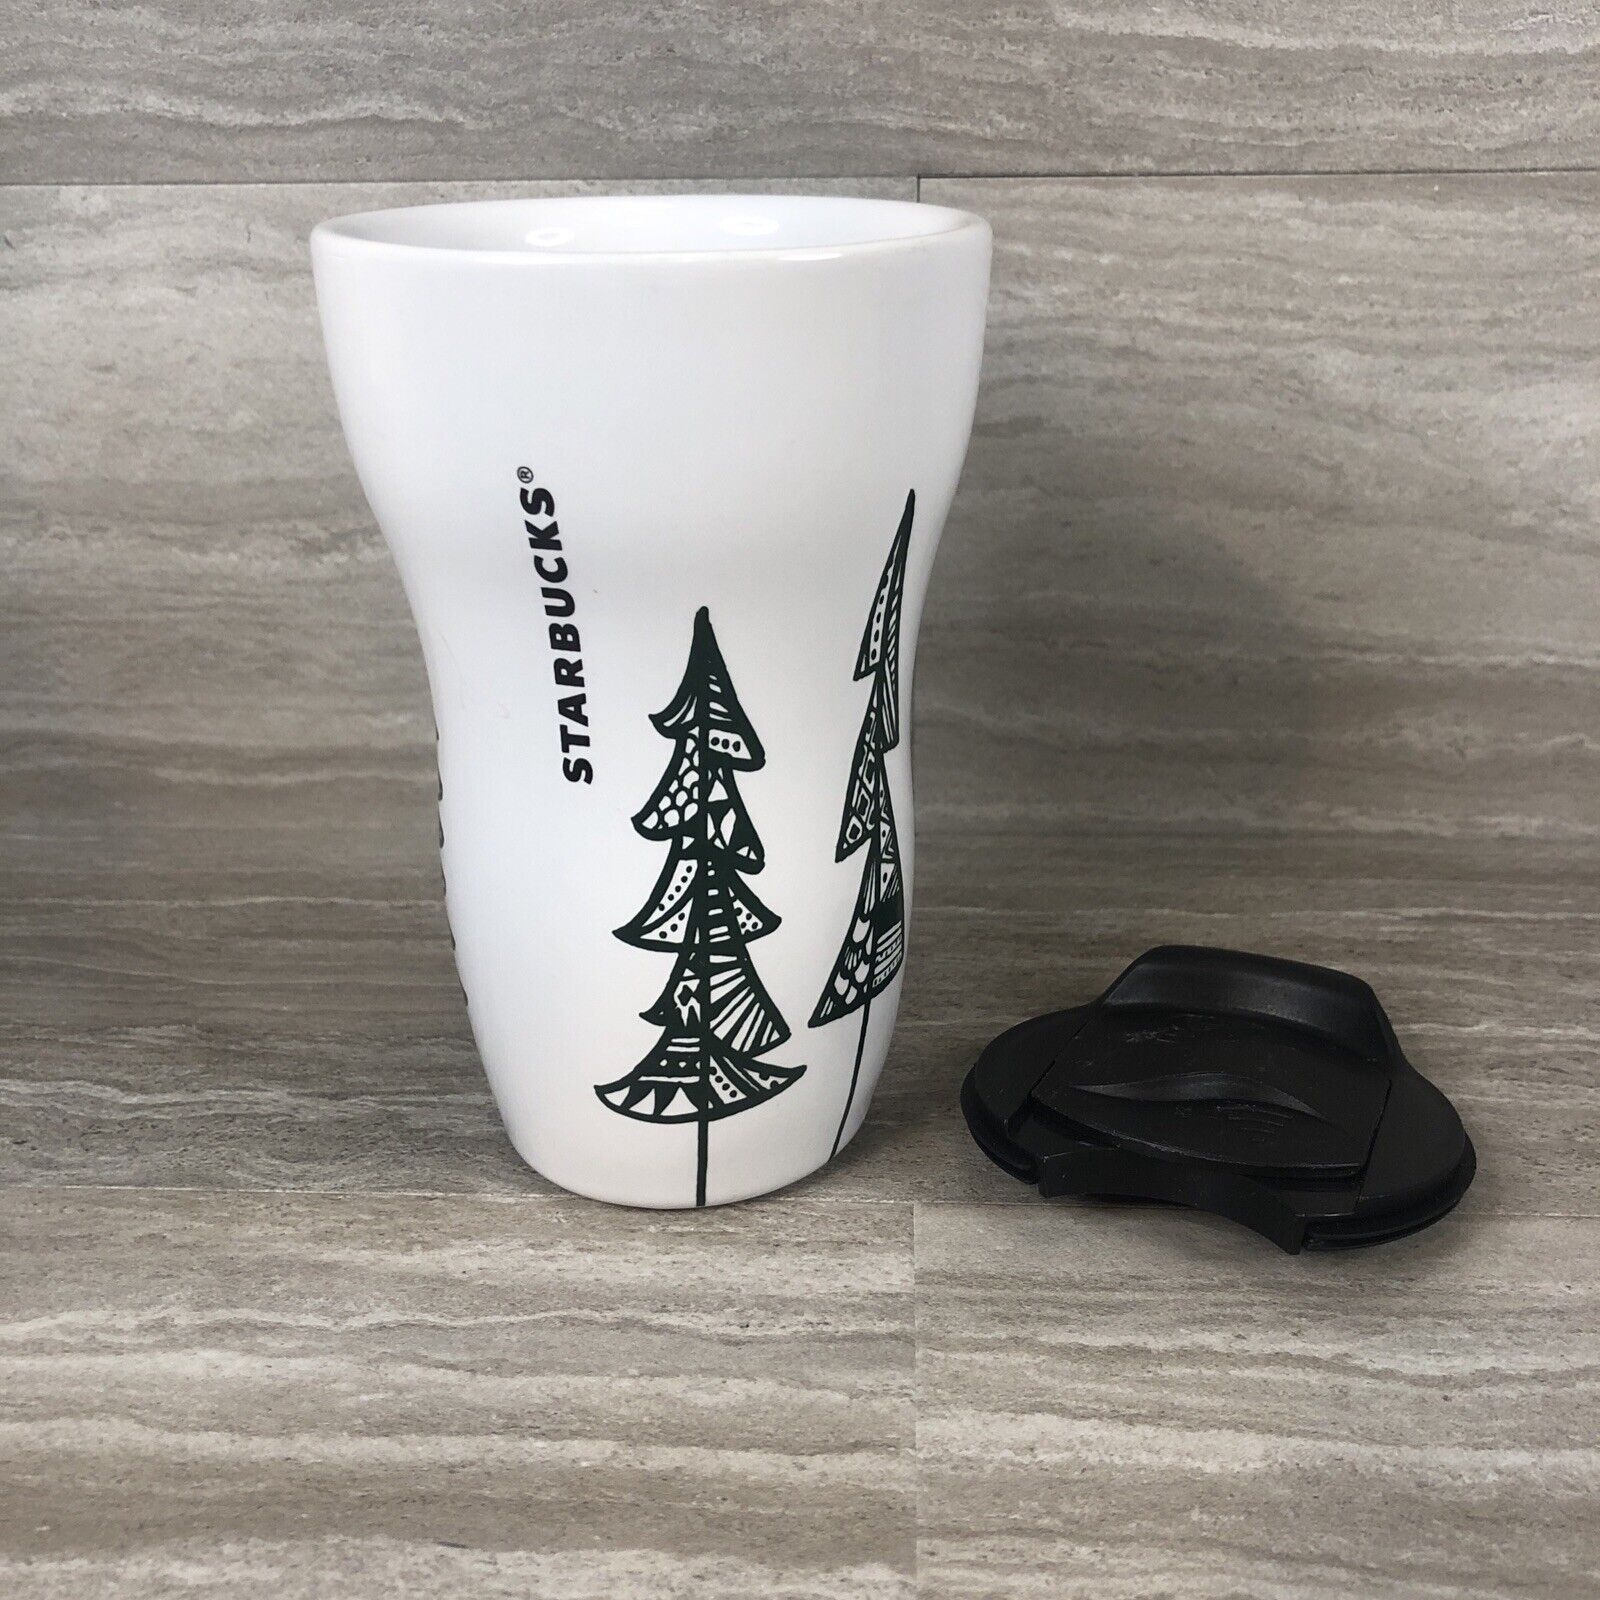 Starbucks Travel Mug 2015 9 oz. Ceramic White with Green Trees Black Lid EUC